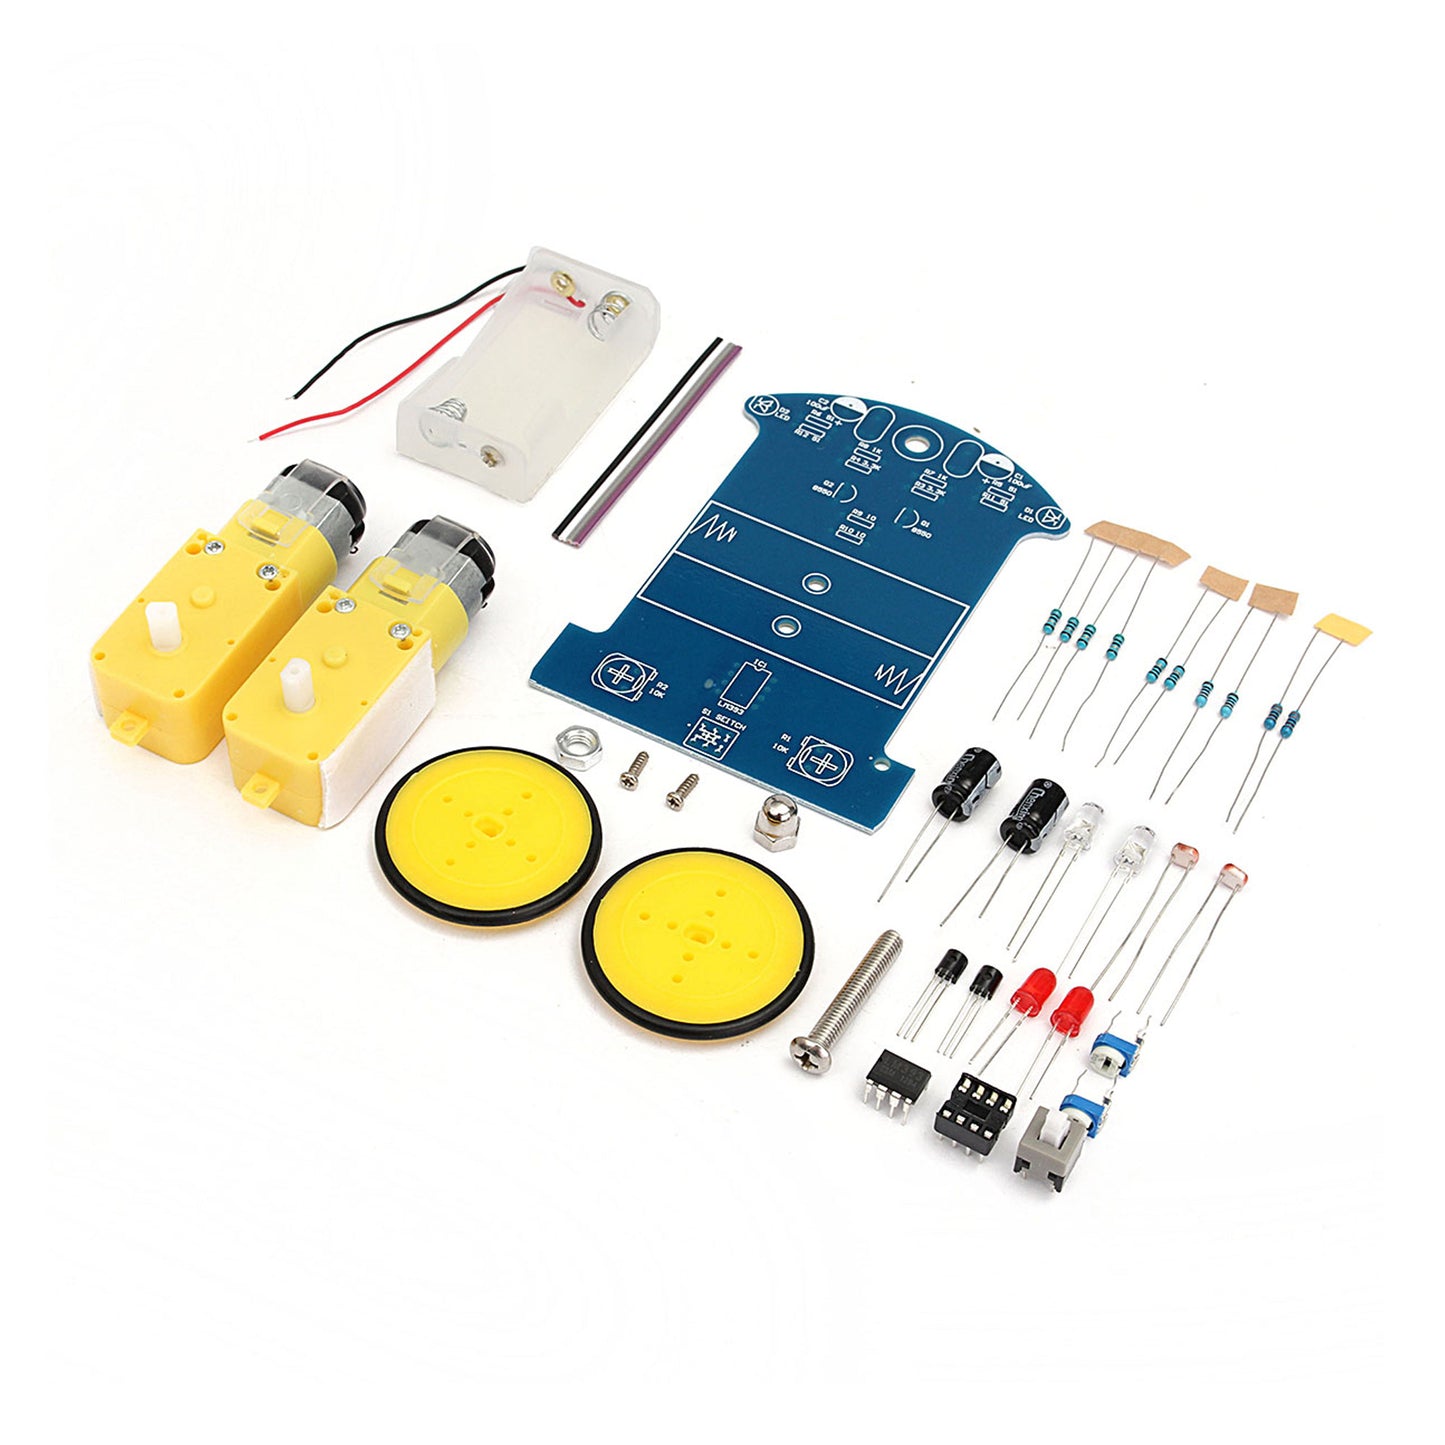 DIY D2-1 Intelligent Line Follower Car Kit DIY Smart Tracking Robot Car Electronic Kit With Reduction Motor Set - RS1561 - REES52